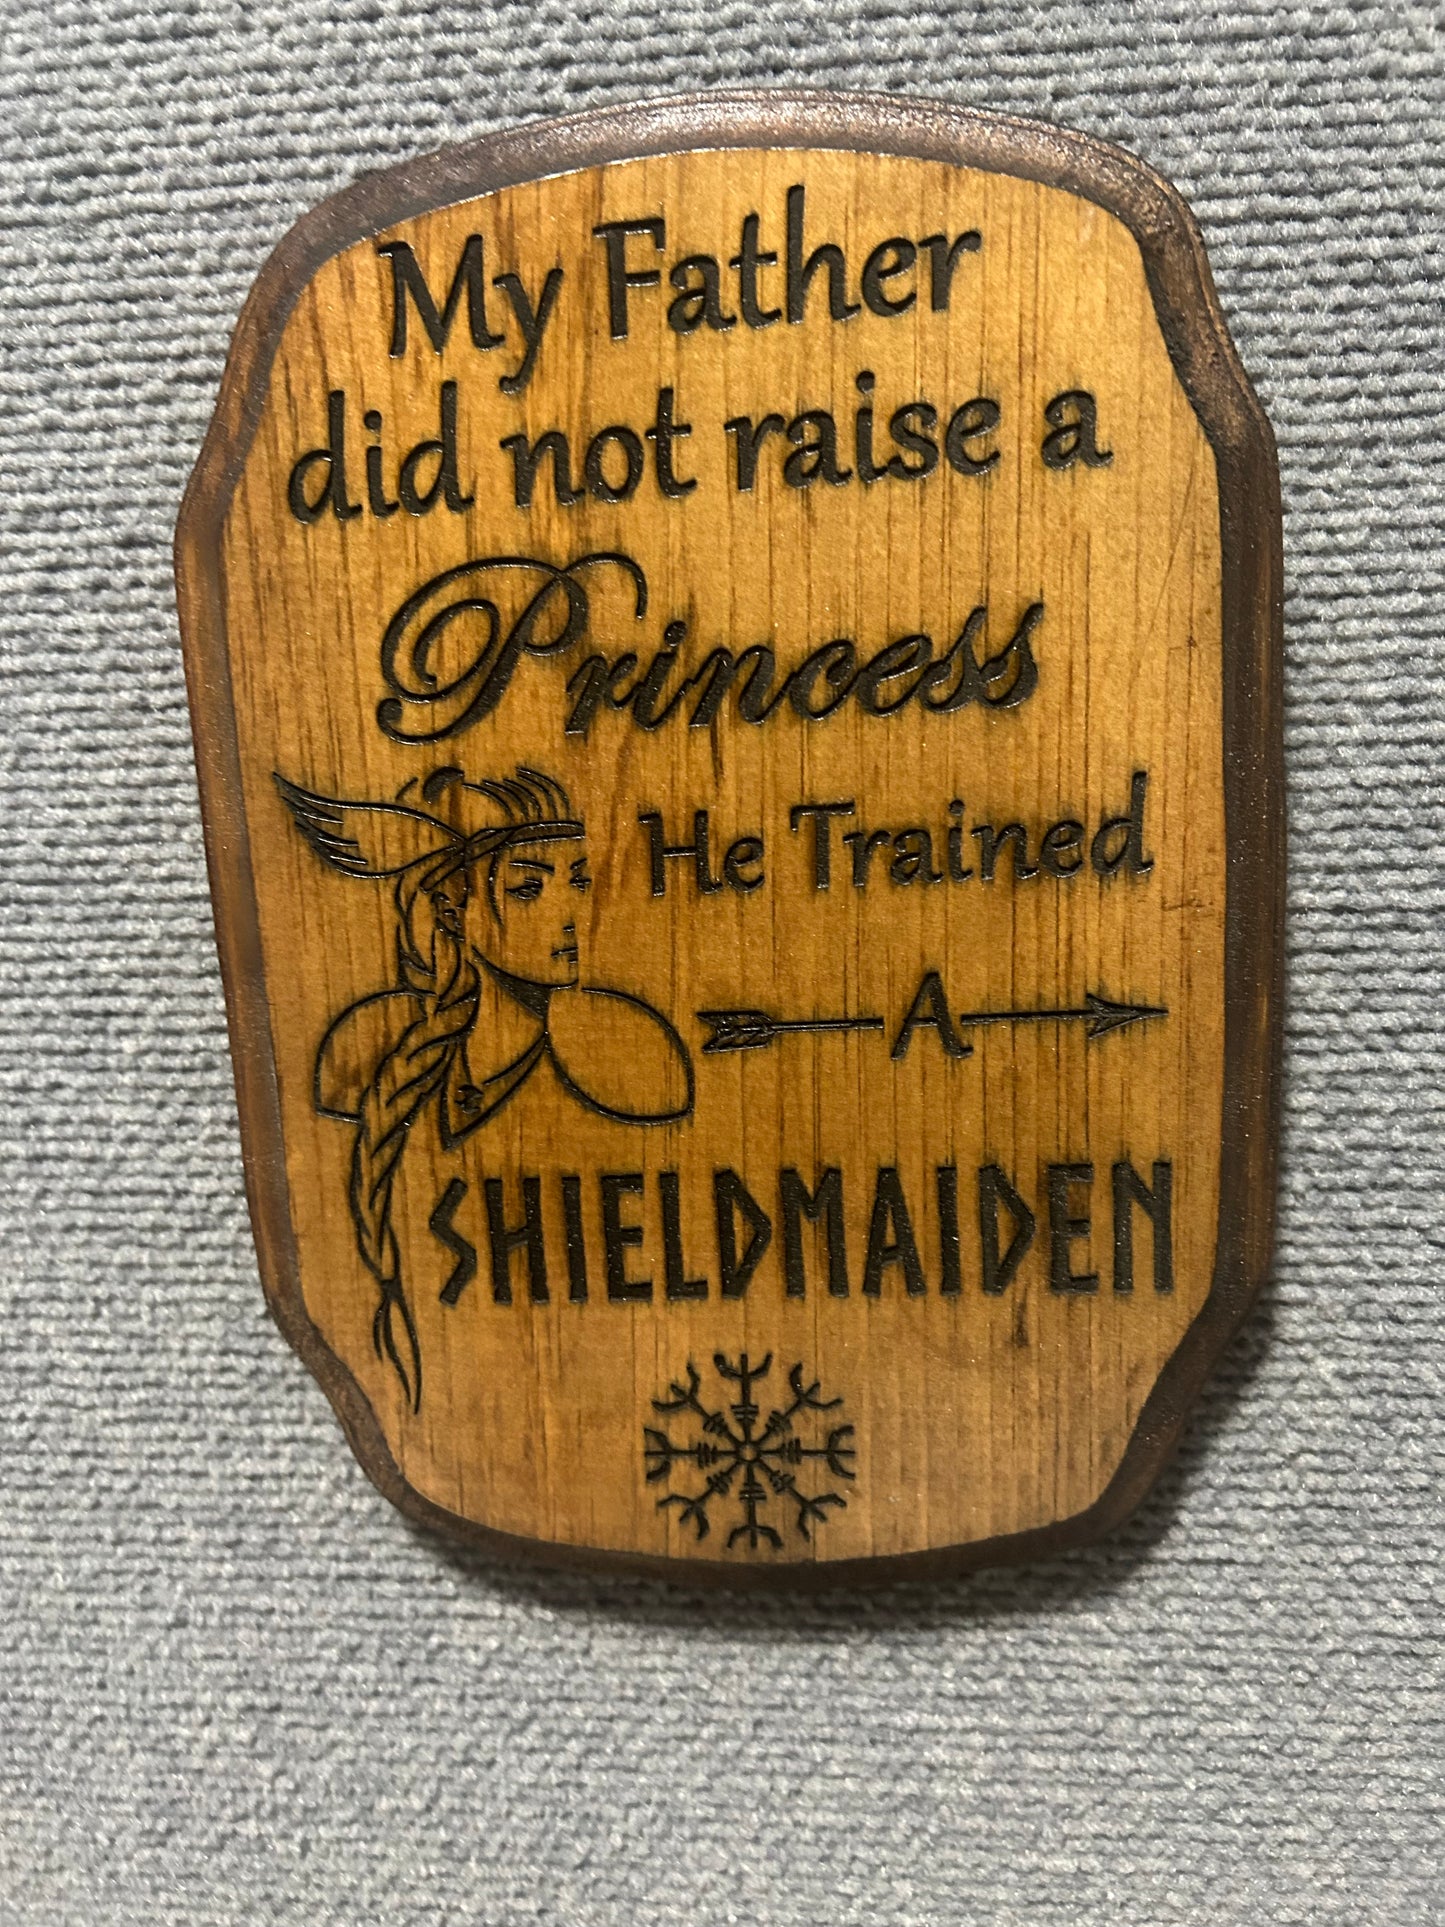 Trained a Shieldmaiden